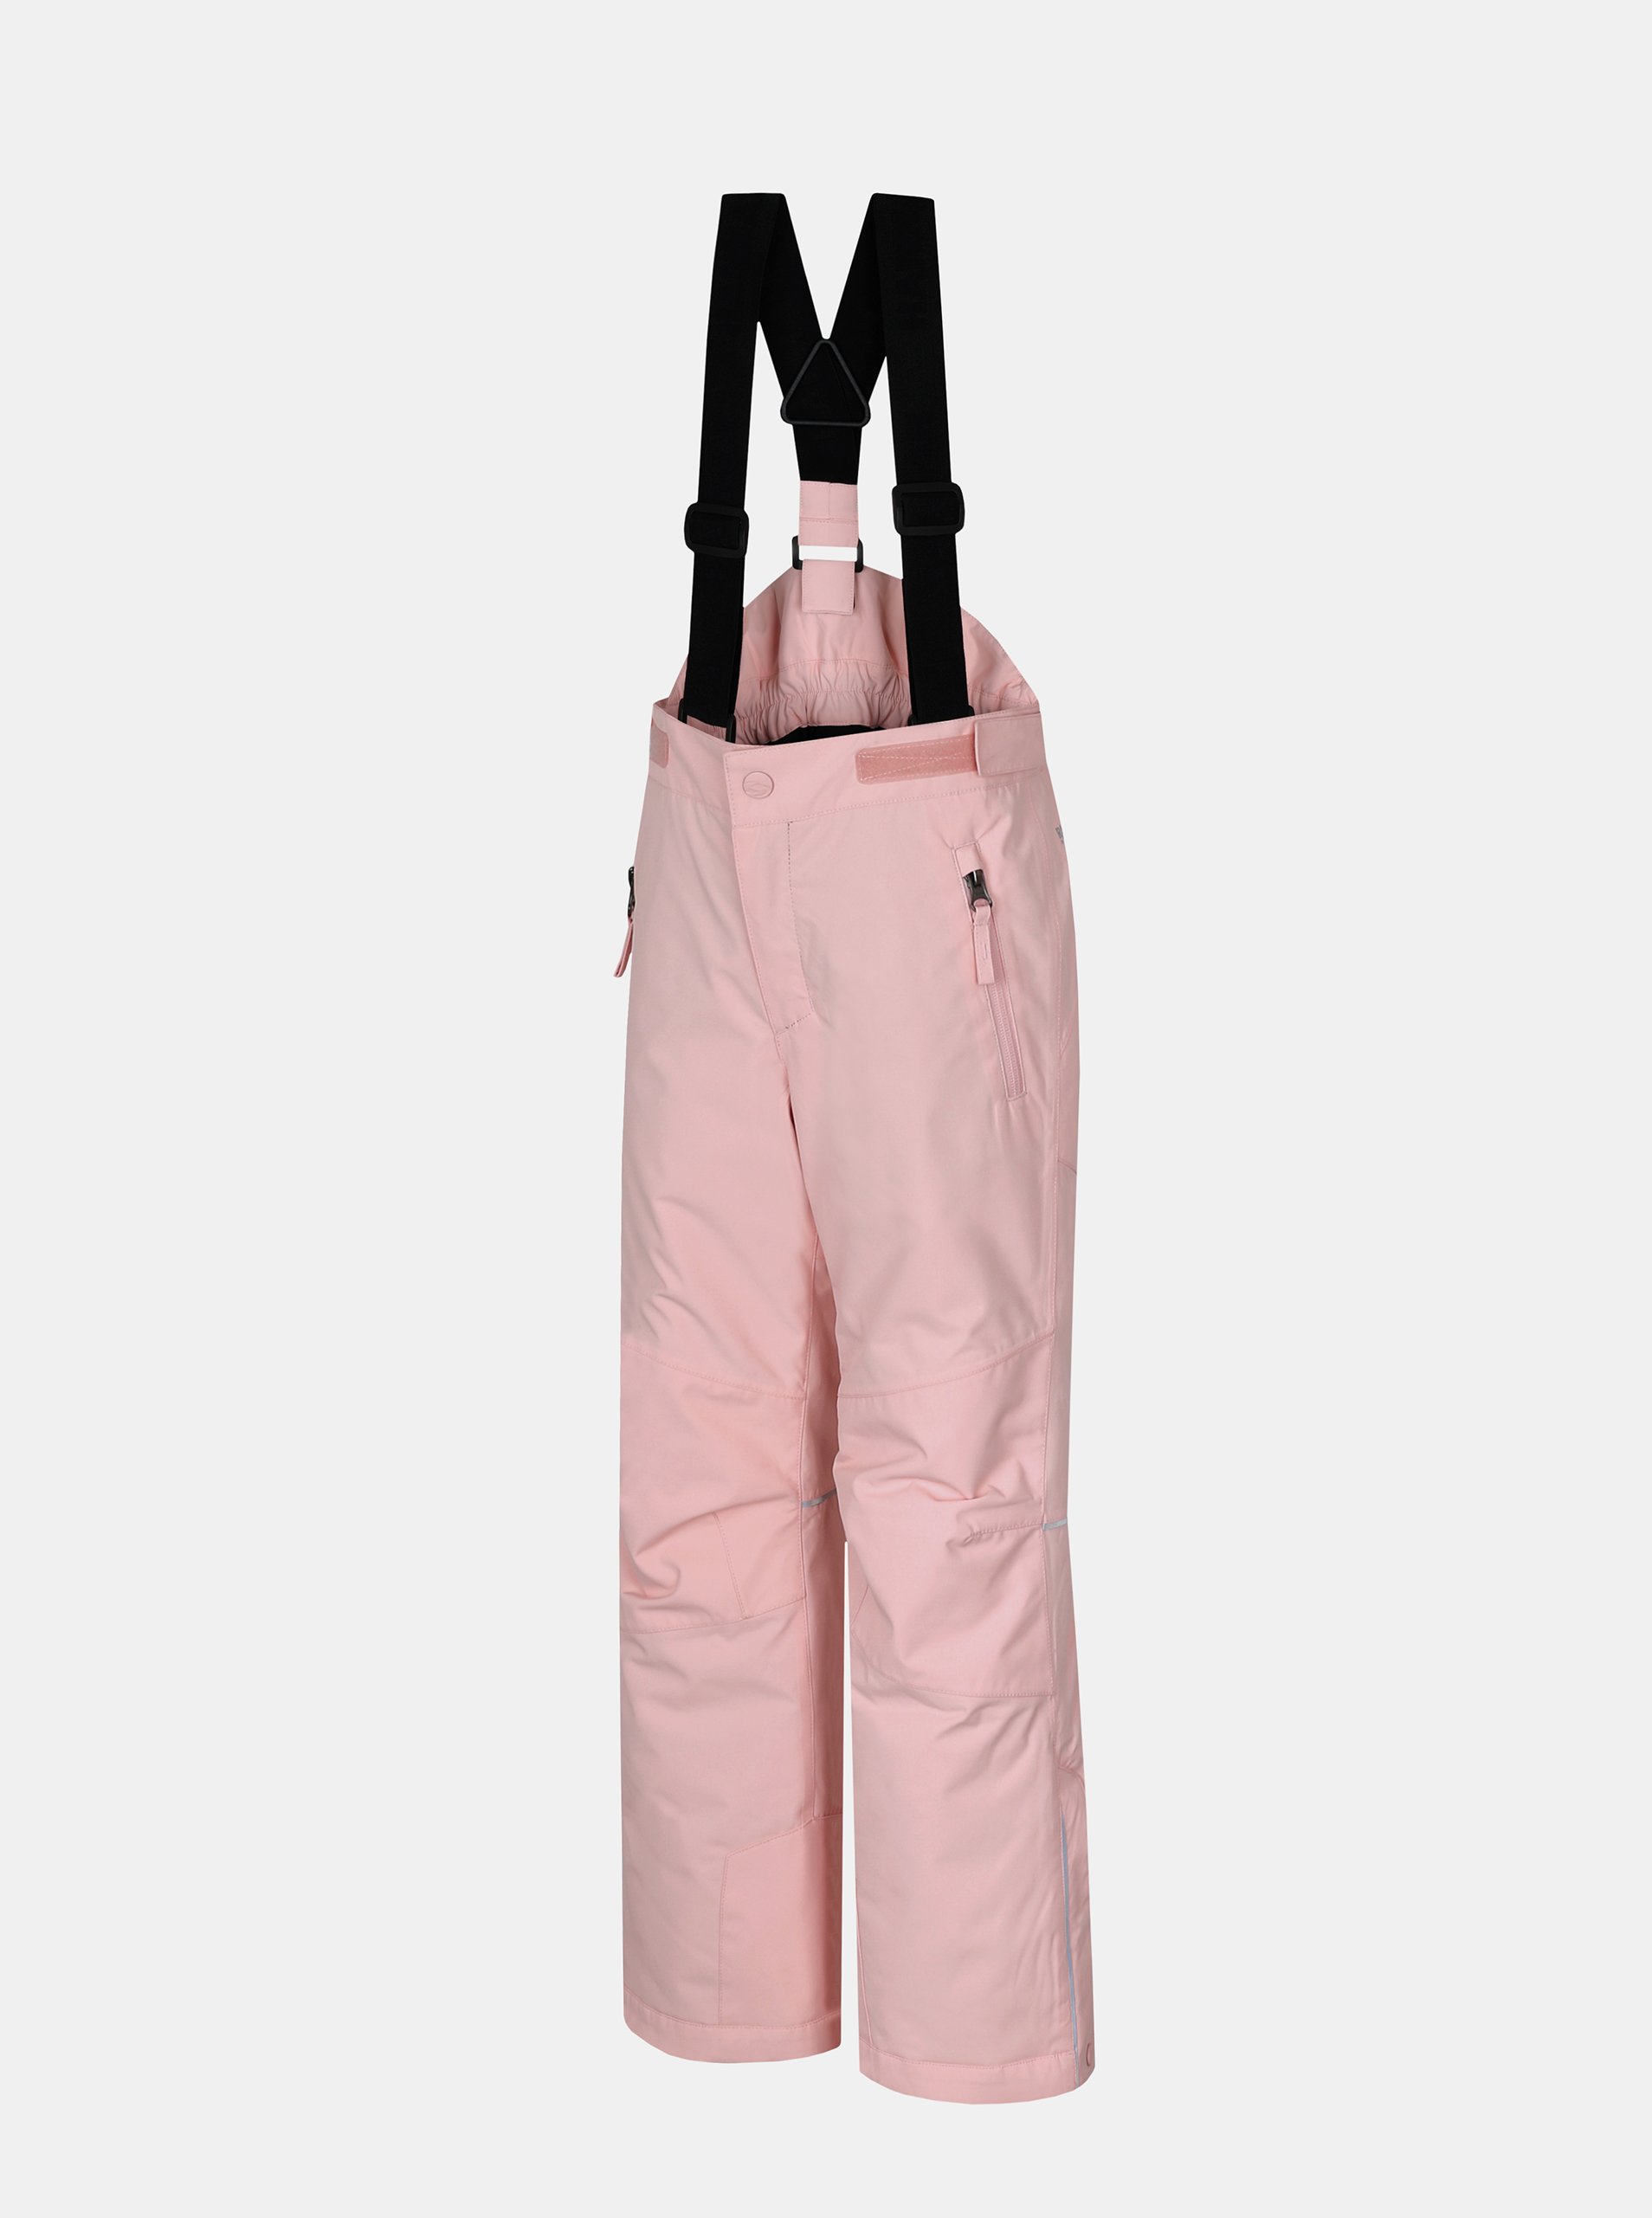 Lacno Ružové dievčenské zateplené nohavice Hannah